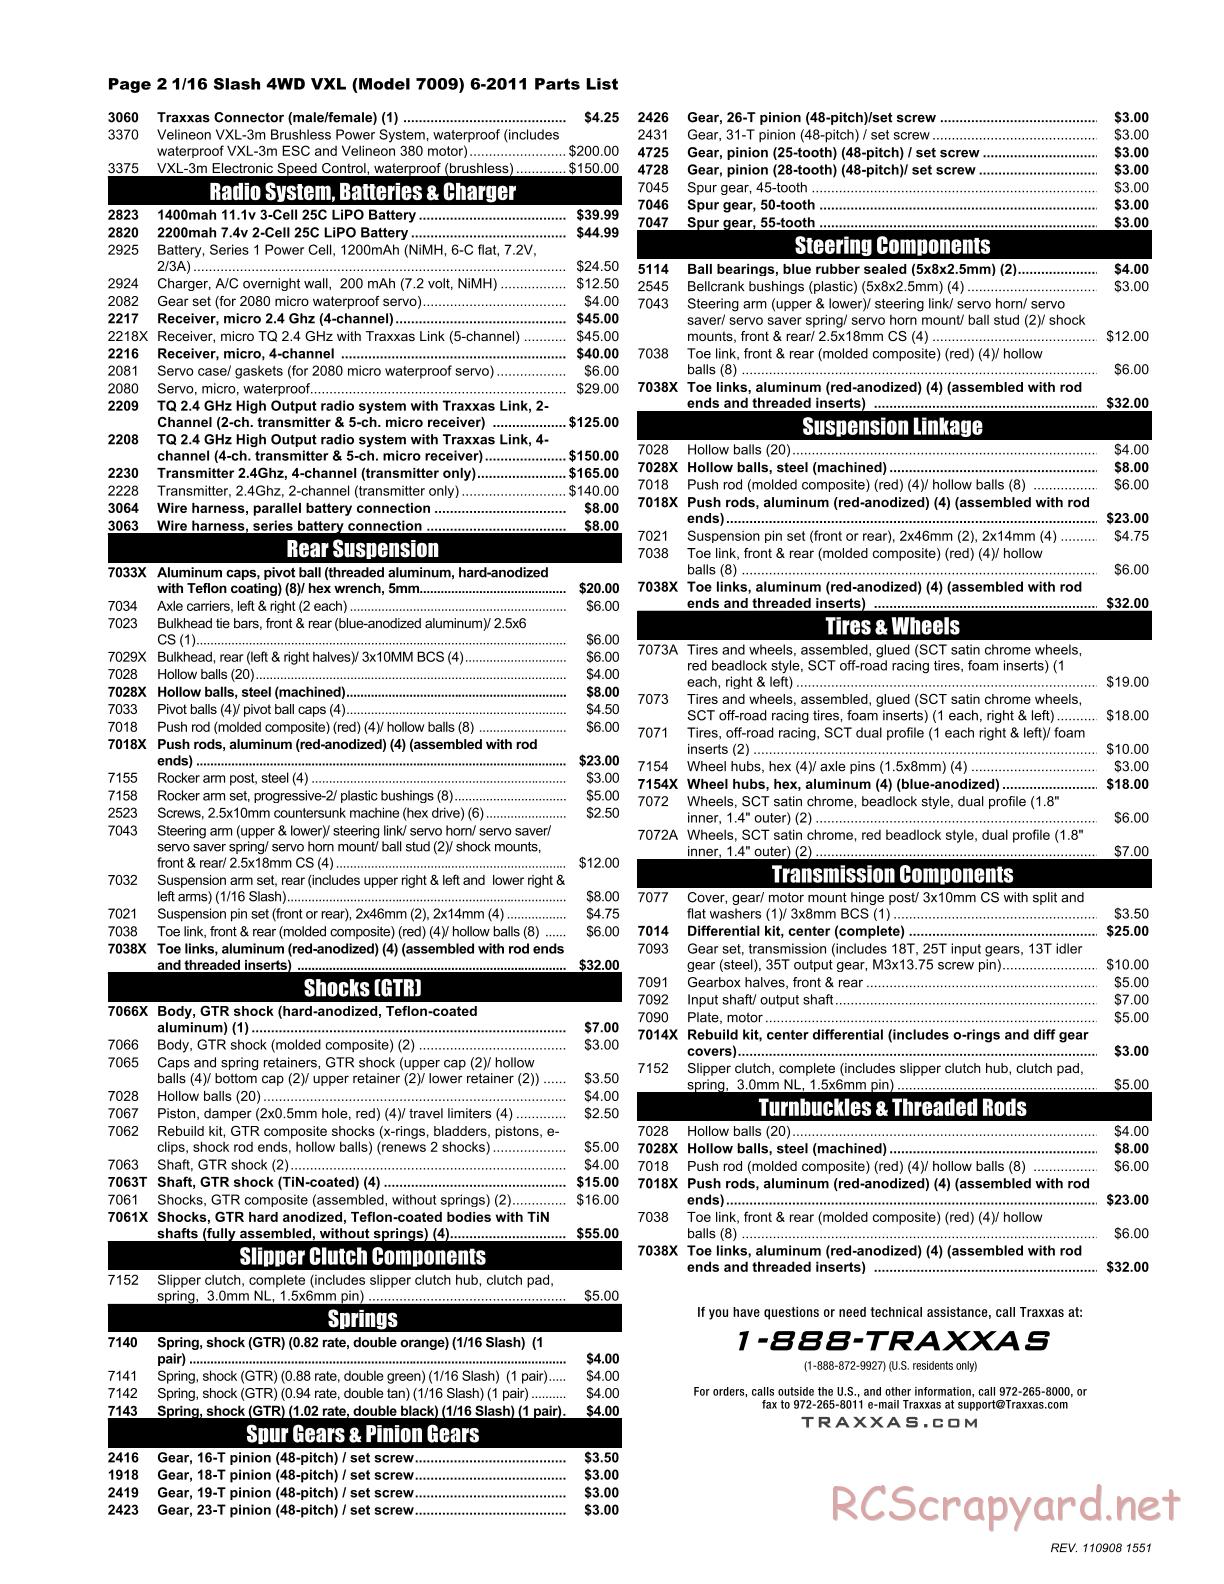 Traxxas - 1/16 Slash 4x4 VXL (2011) - Parts List - Page 2